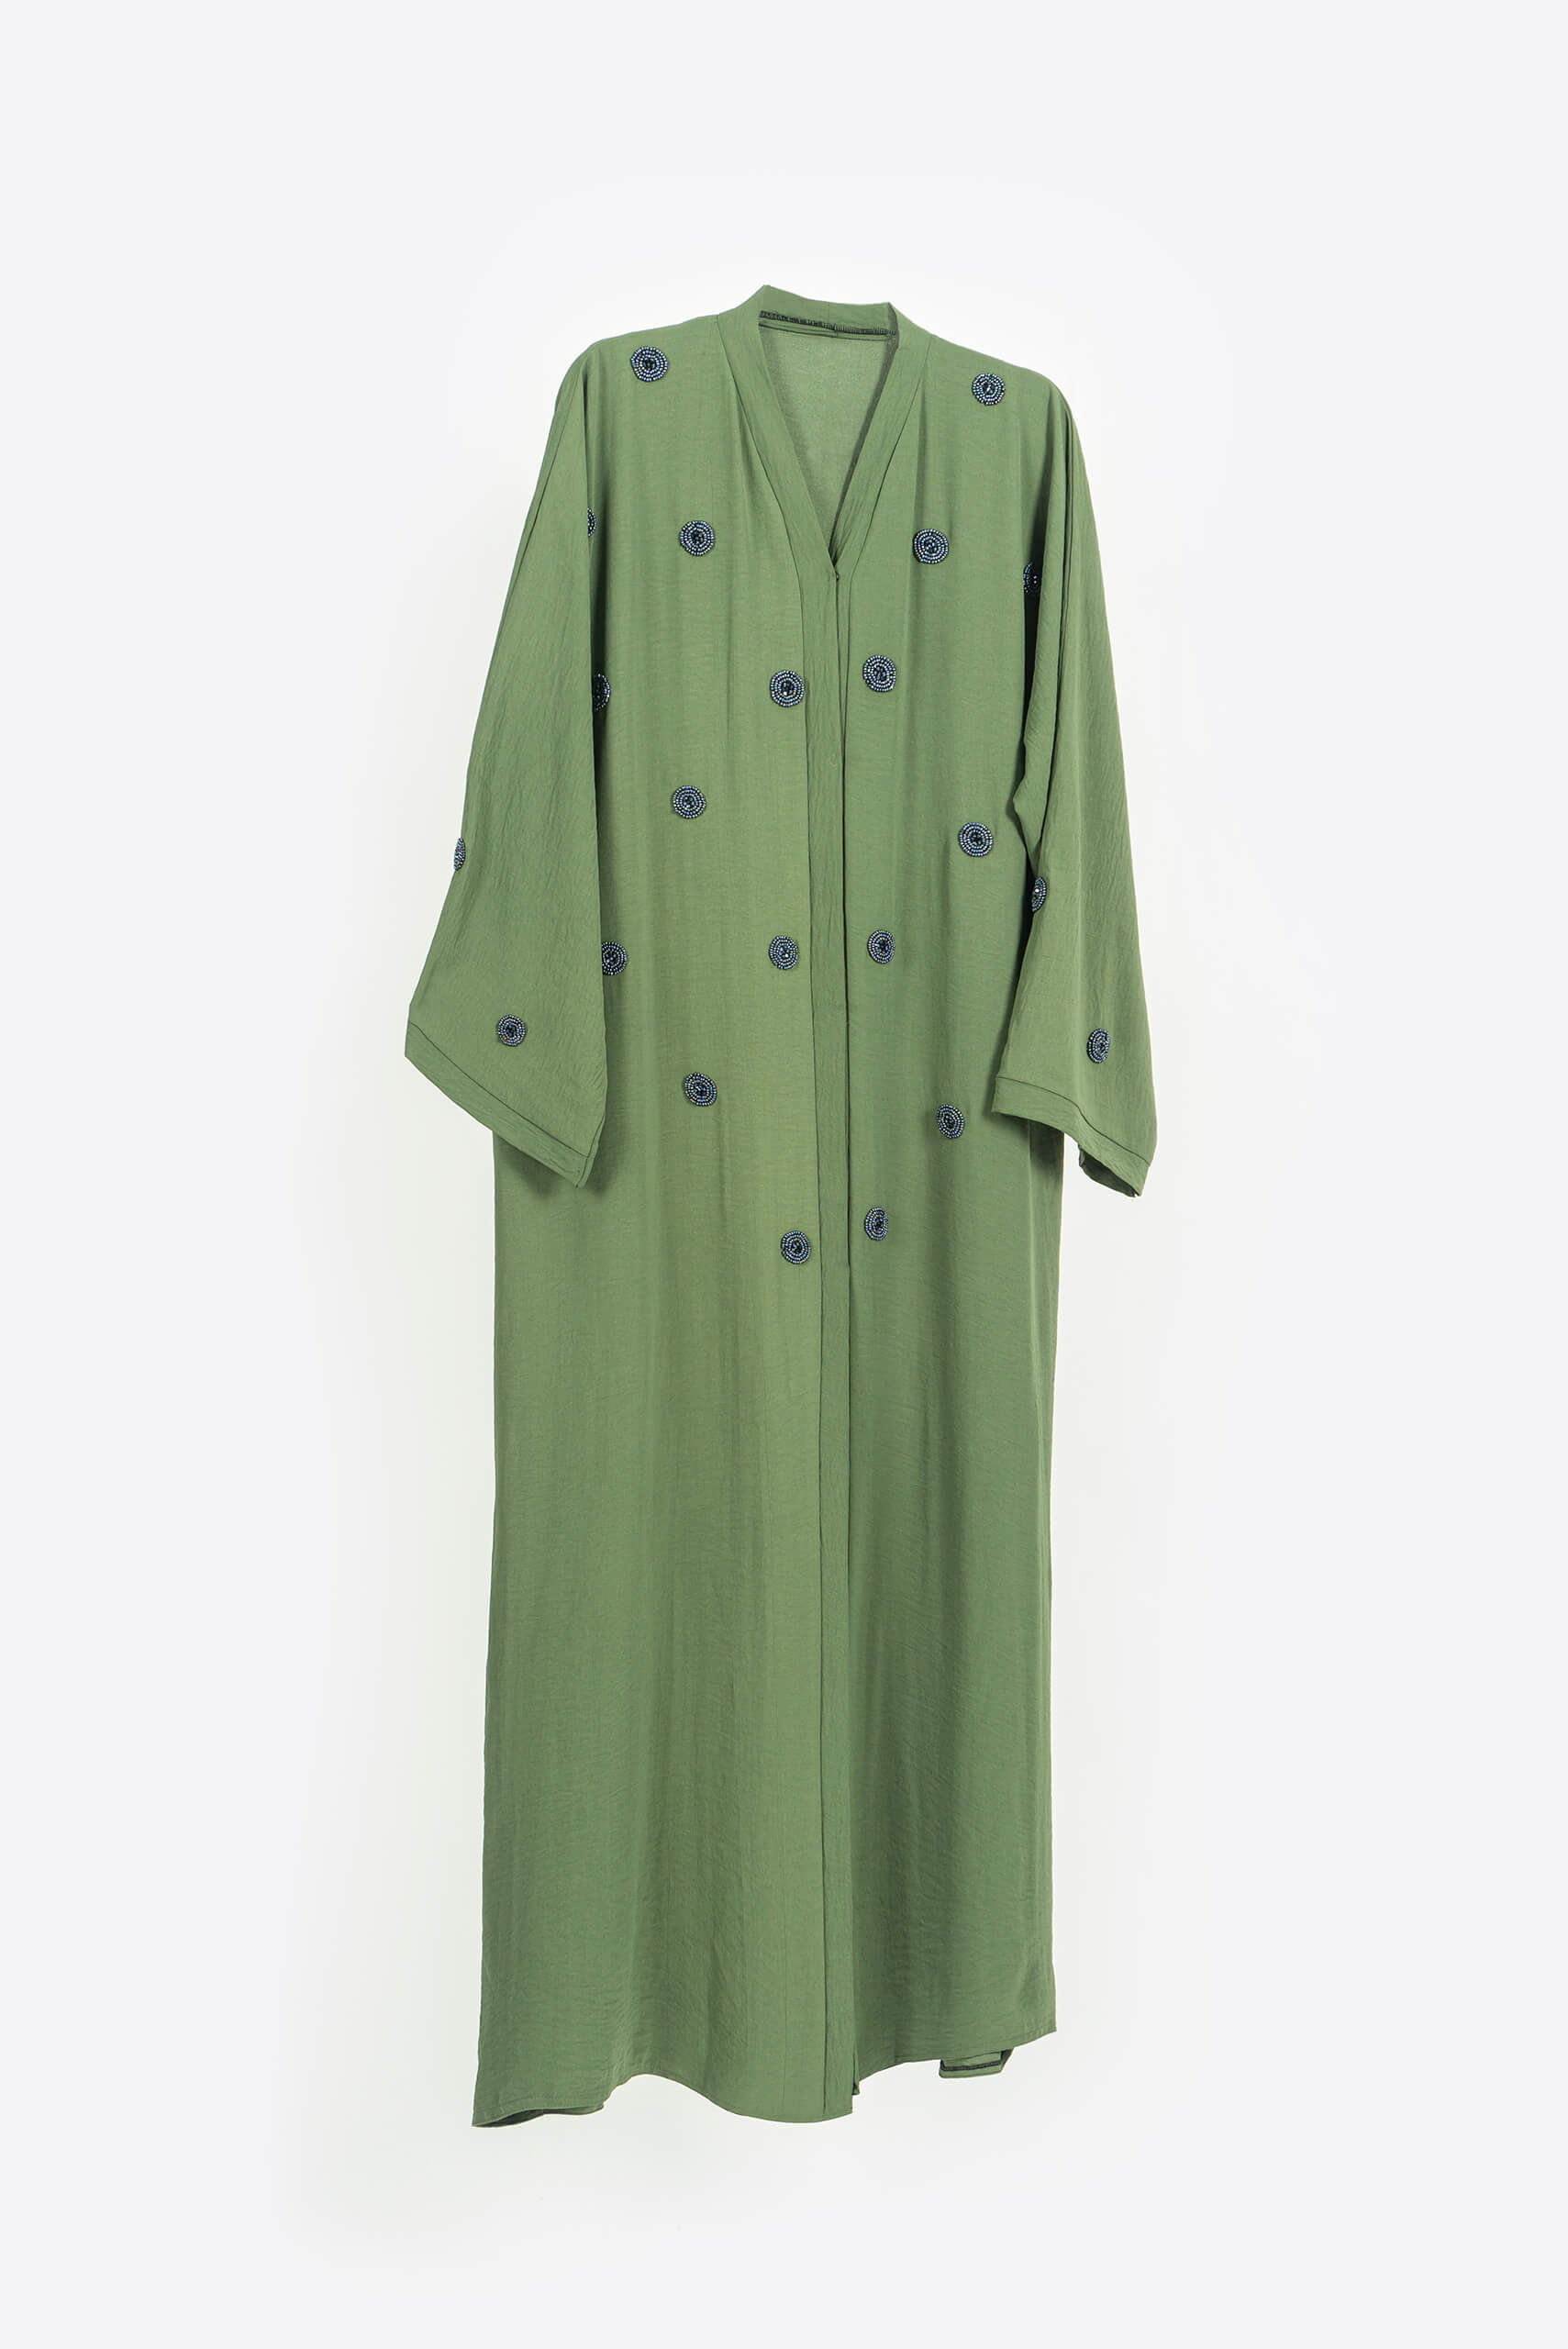 Fancy Olive Green Abaya - Abaya - Muslim Lifestyle Store